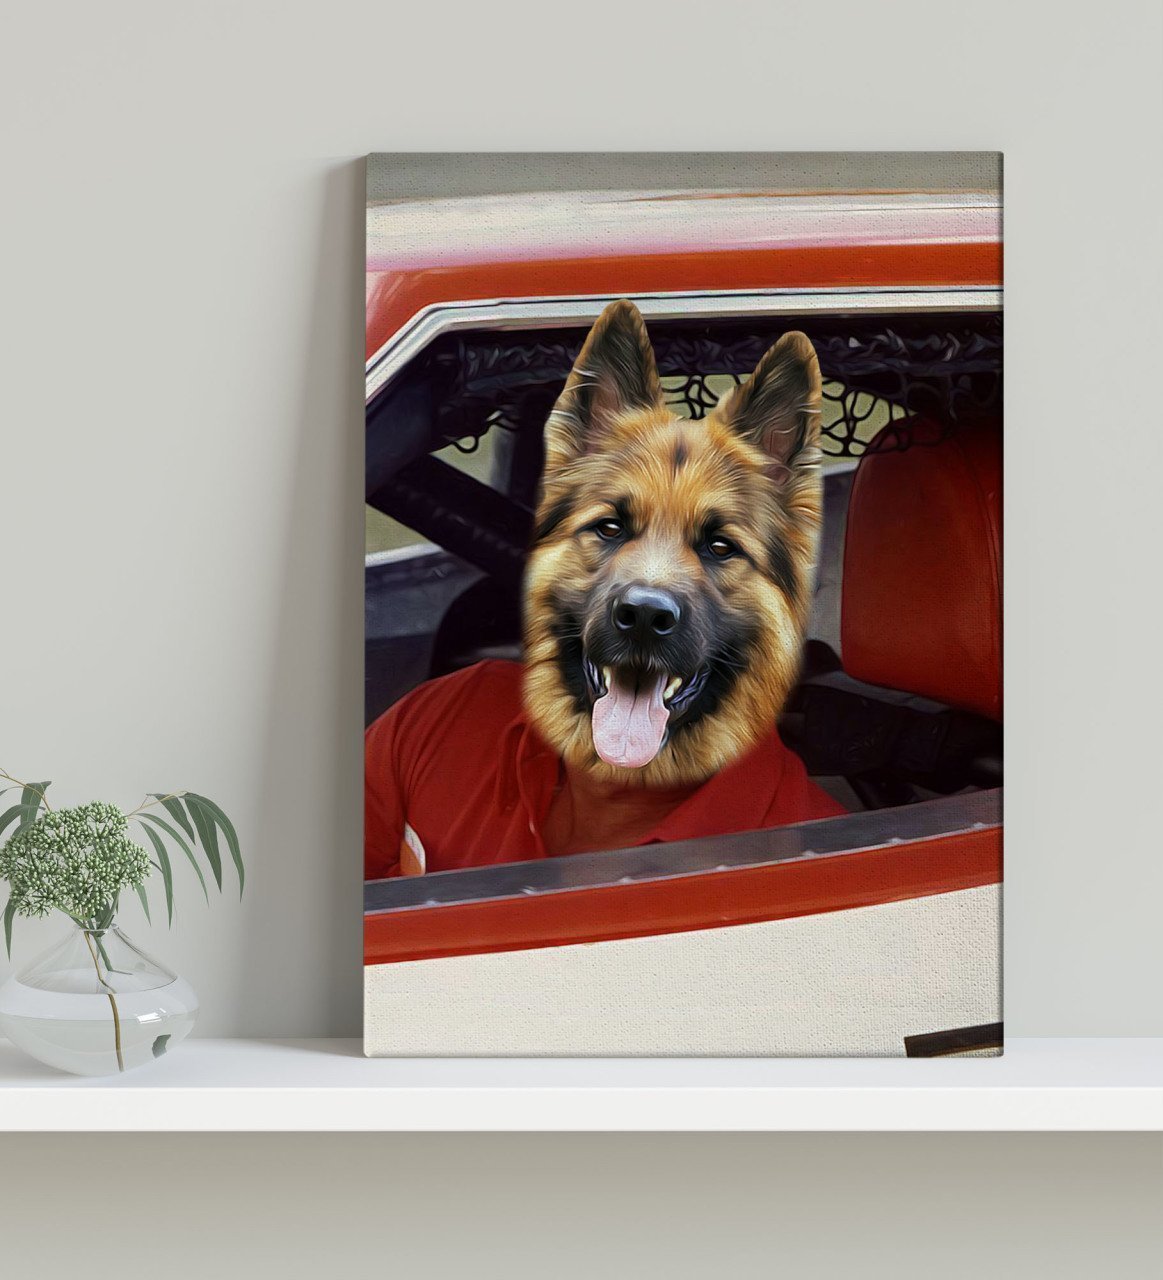 Evcil Dostlara Özel Nascar Pilot Tasarımlı Portre Kanvas Tablo 30x50cm-2